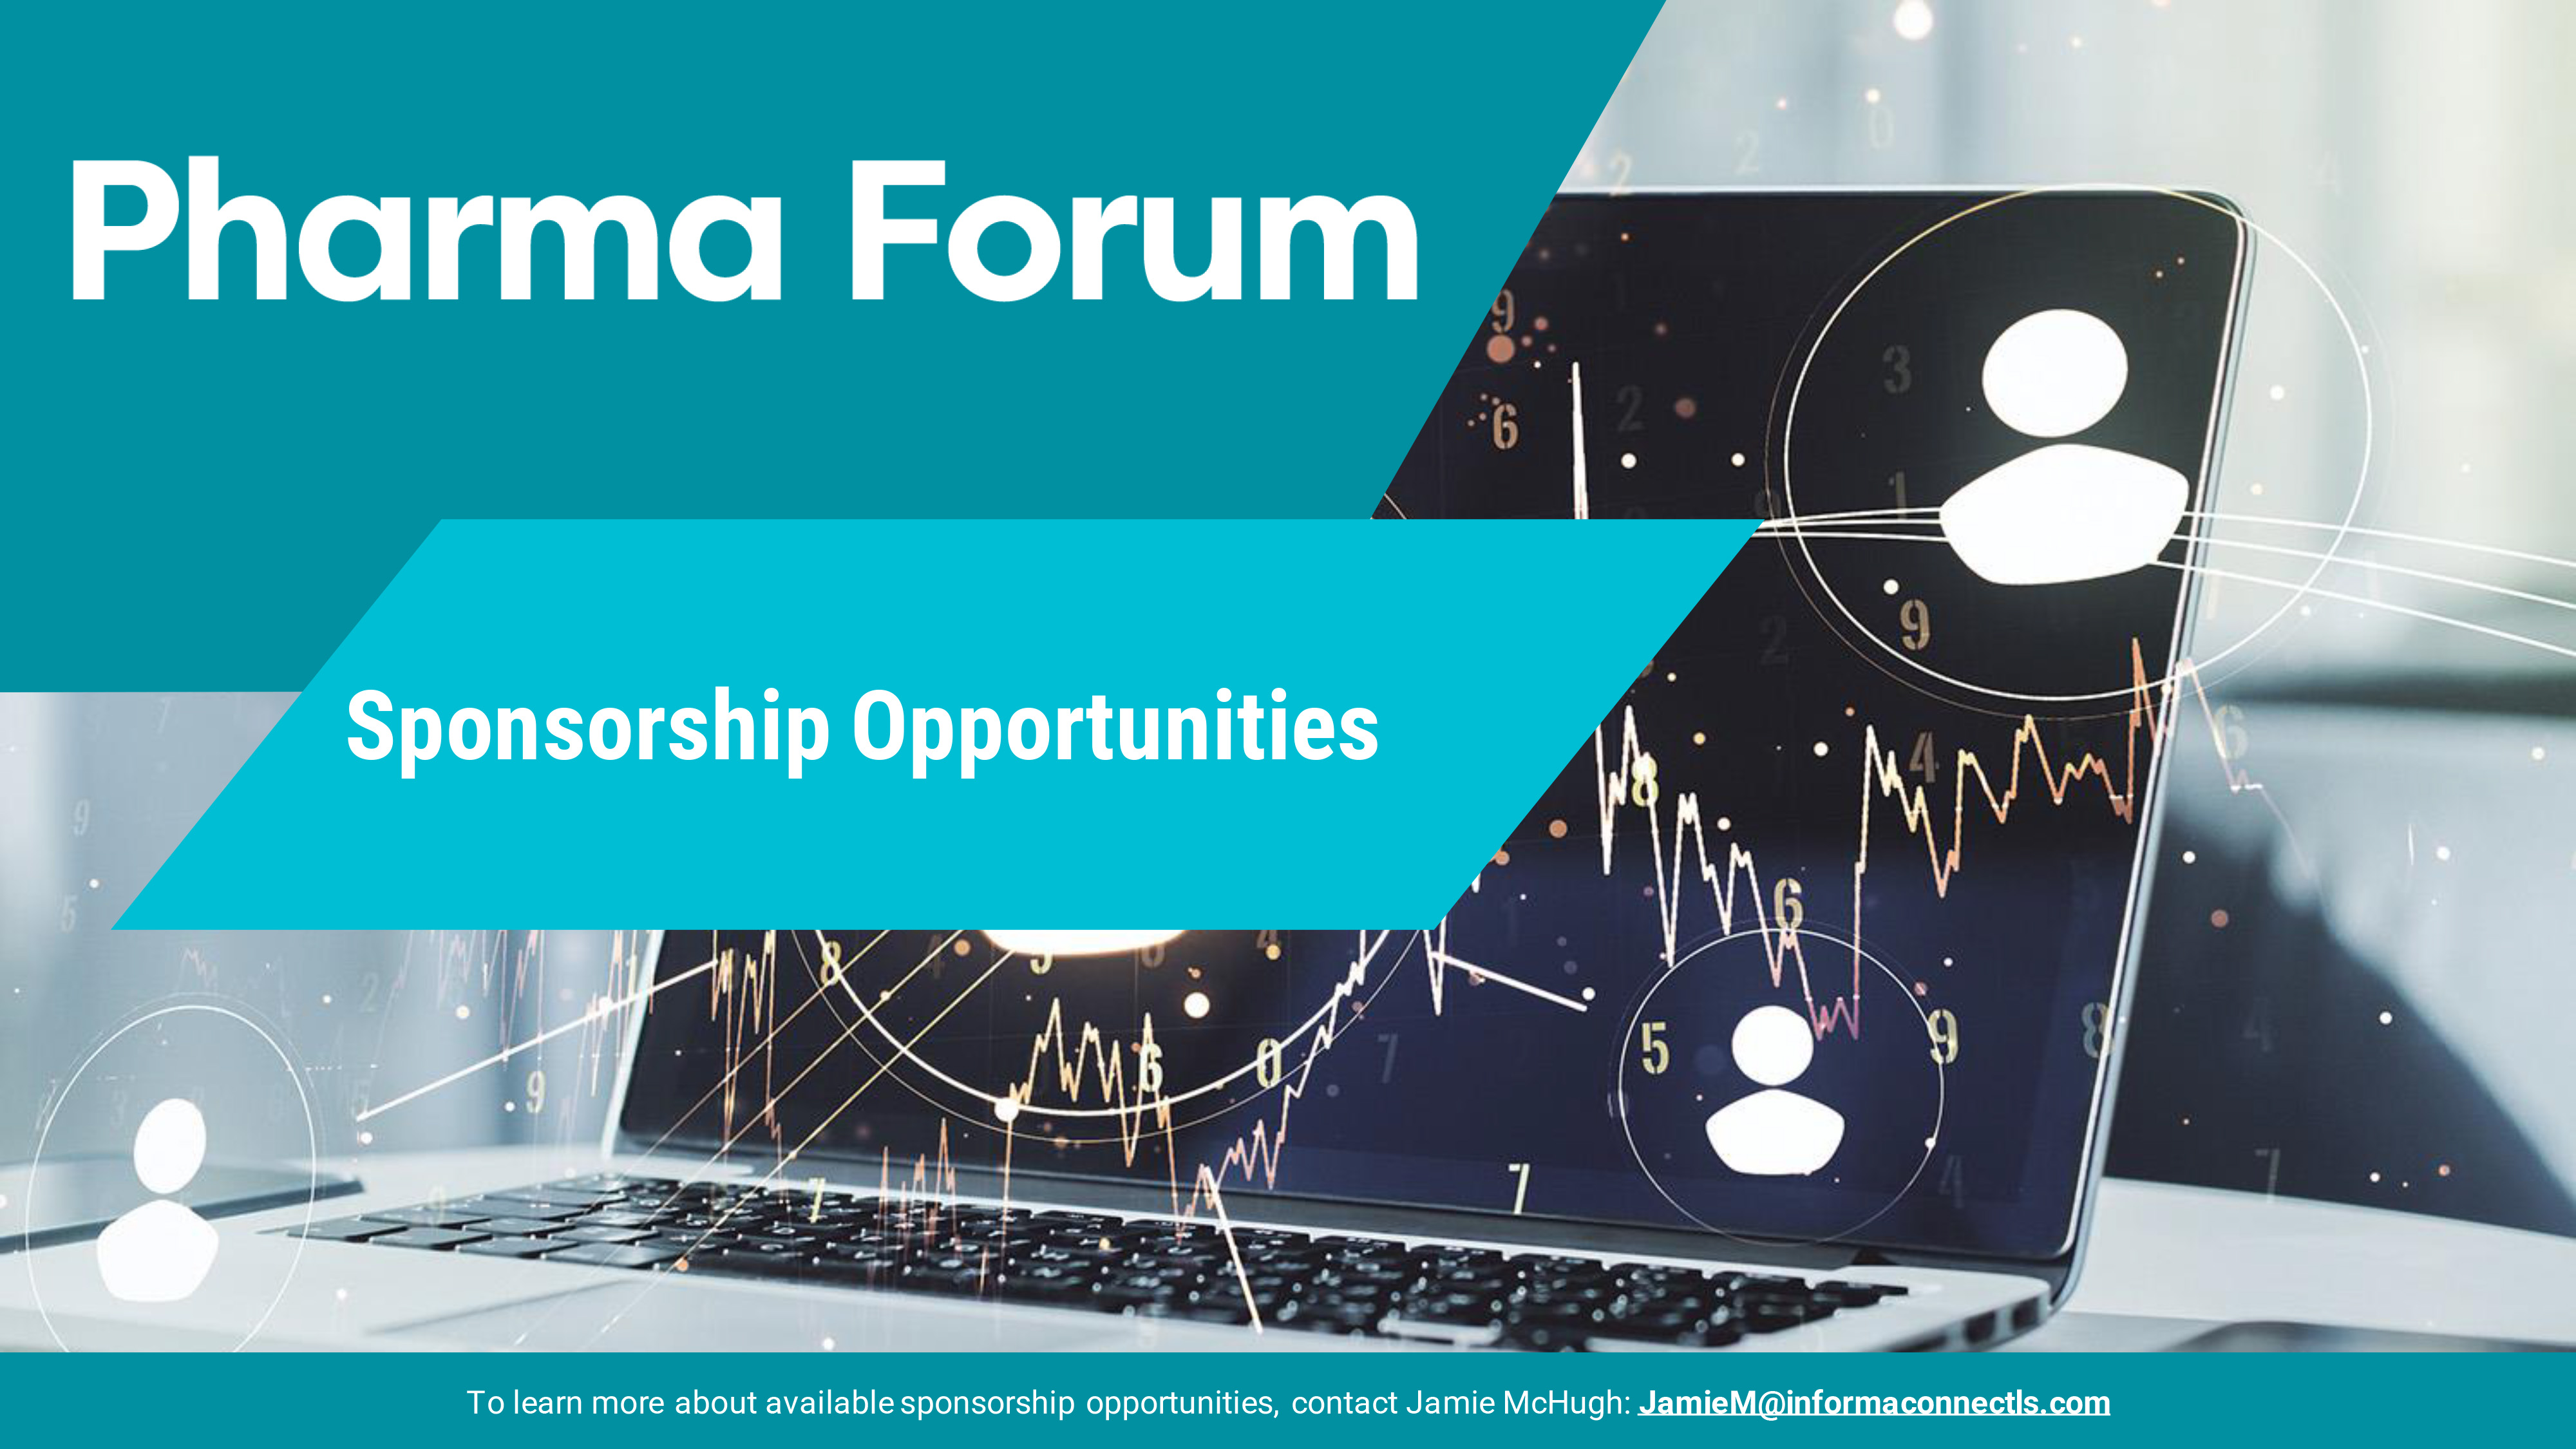 Pharma Forum 2023